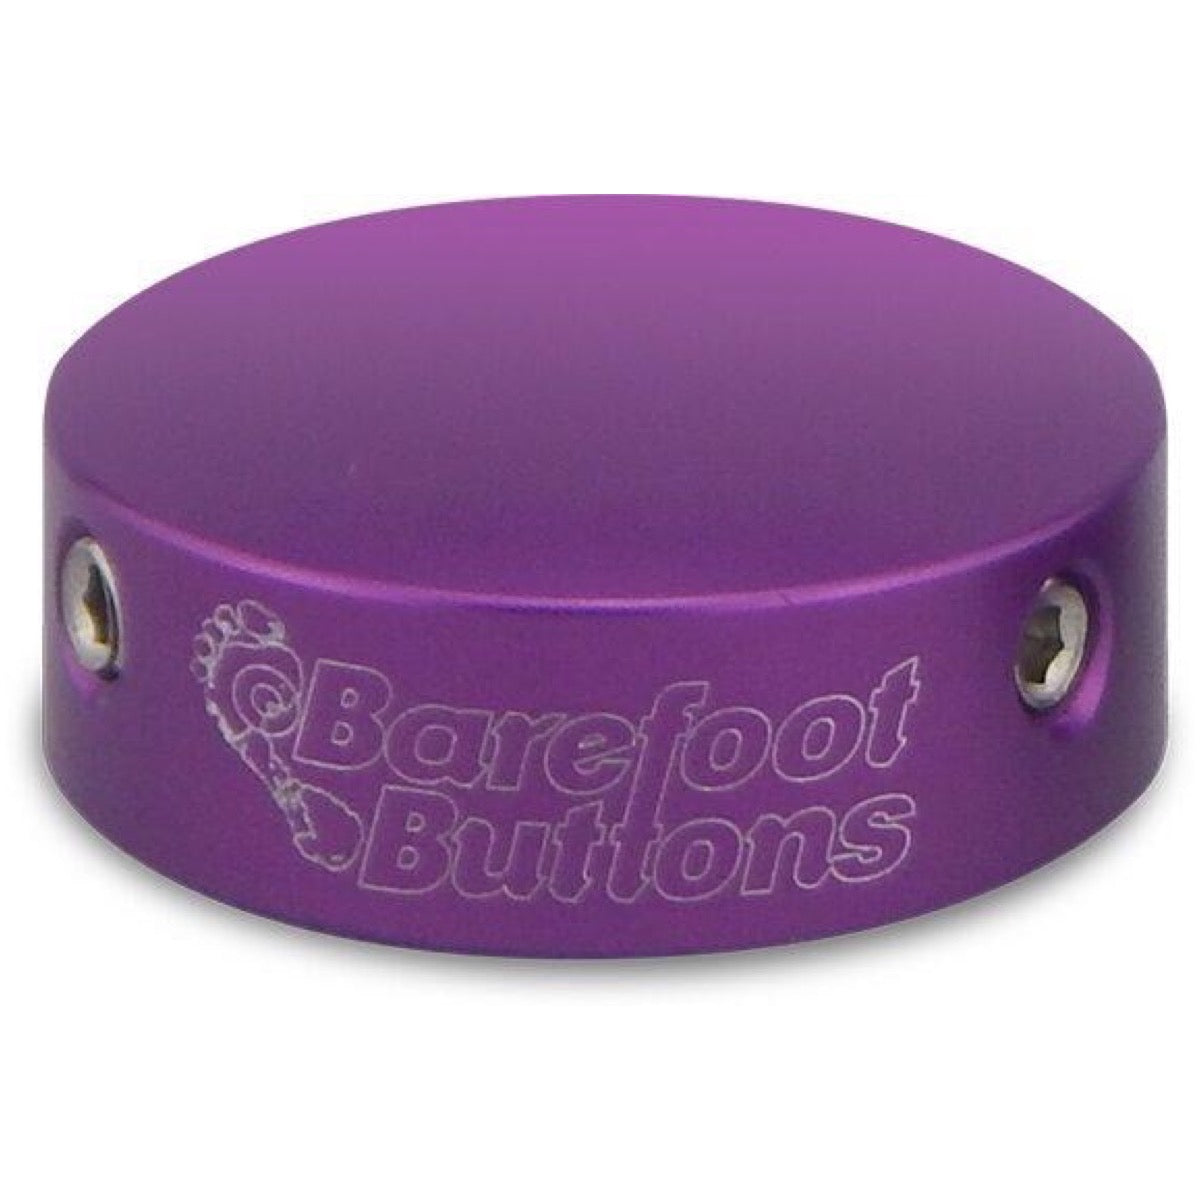 Barefoot Buttons Version 1, Purple